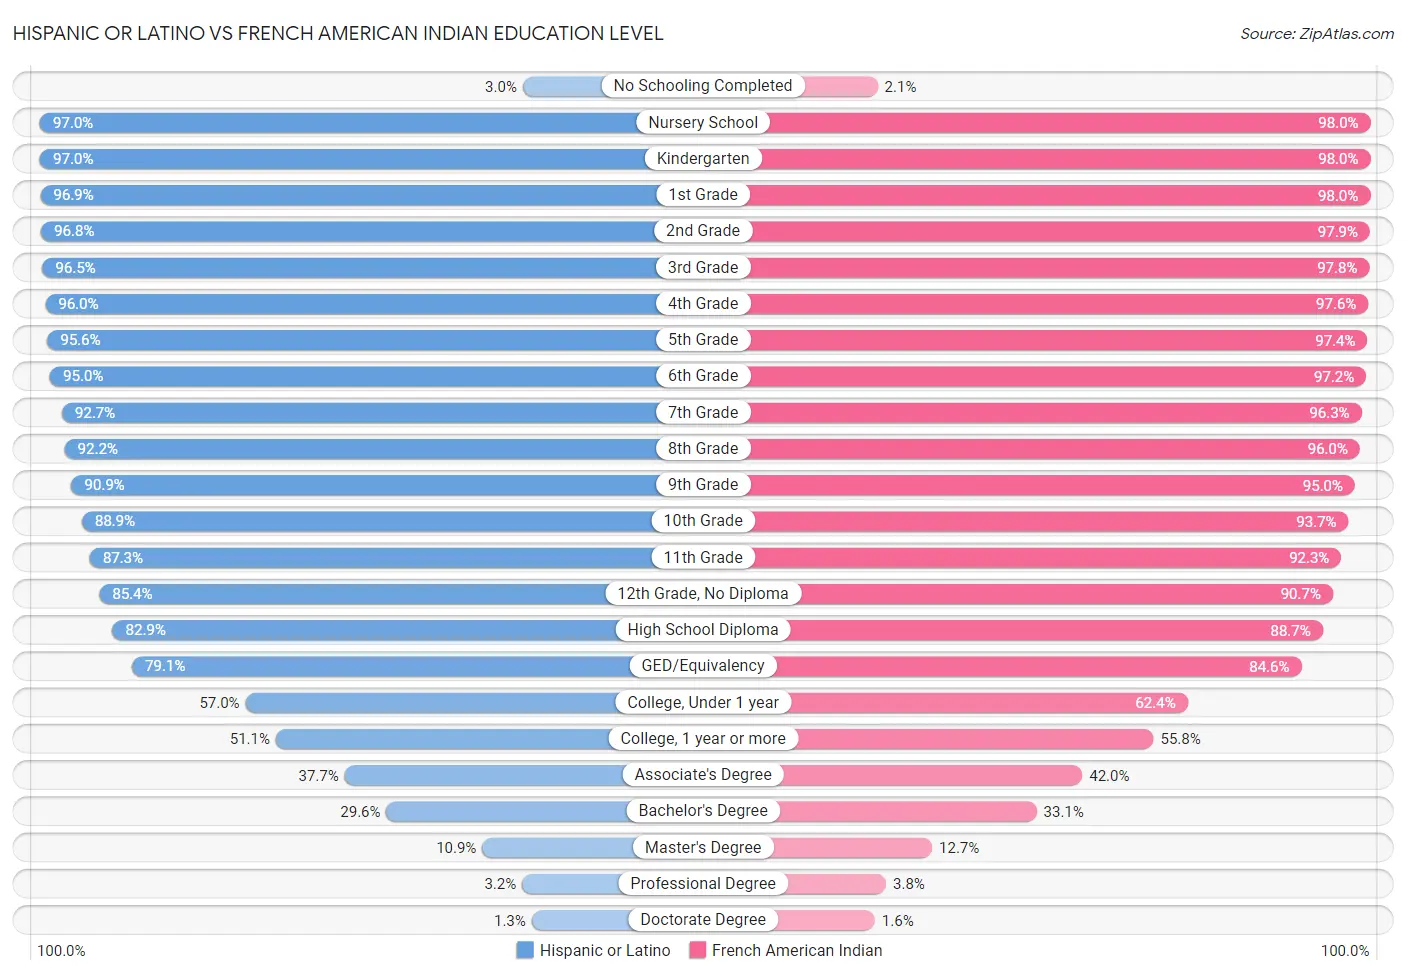 Hispanic or Latino vs French American Indian Education Level